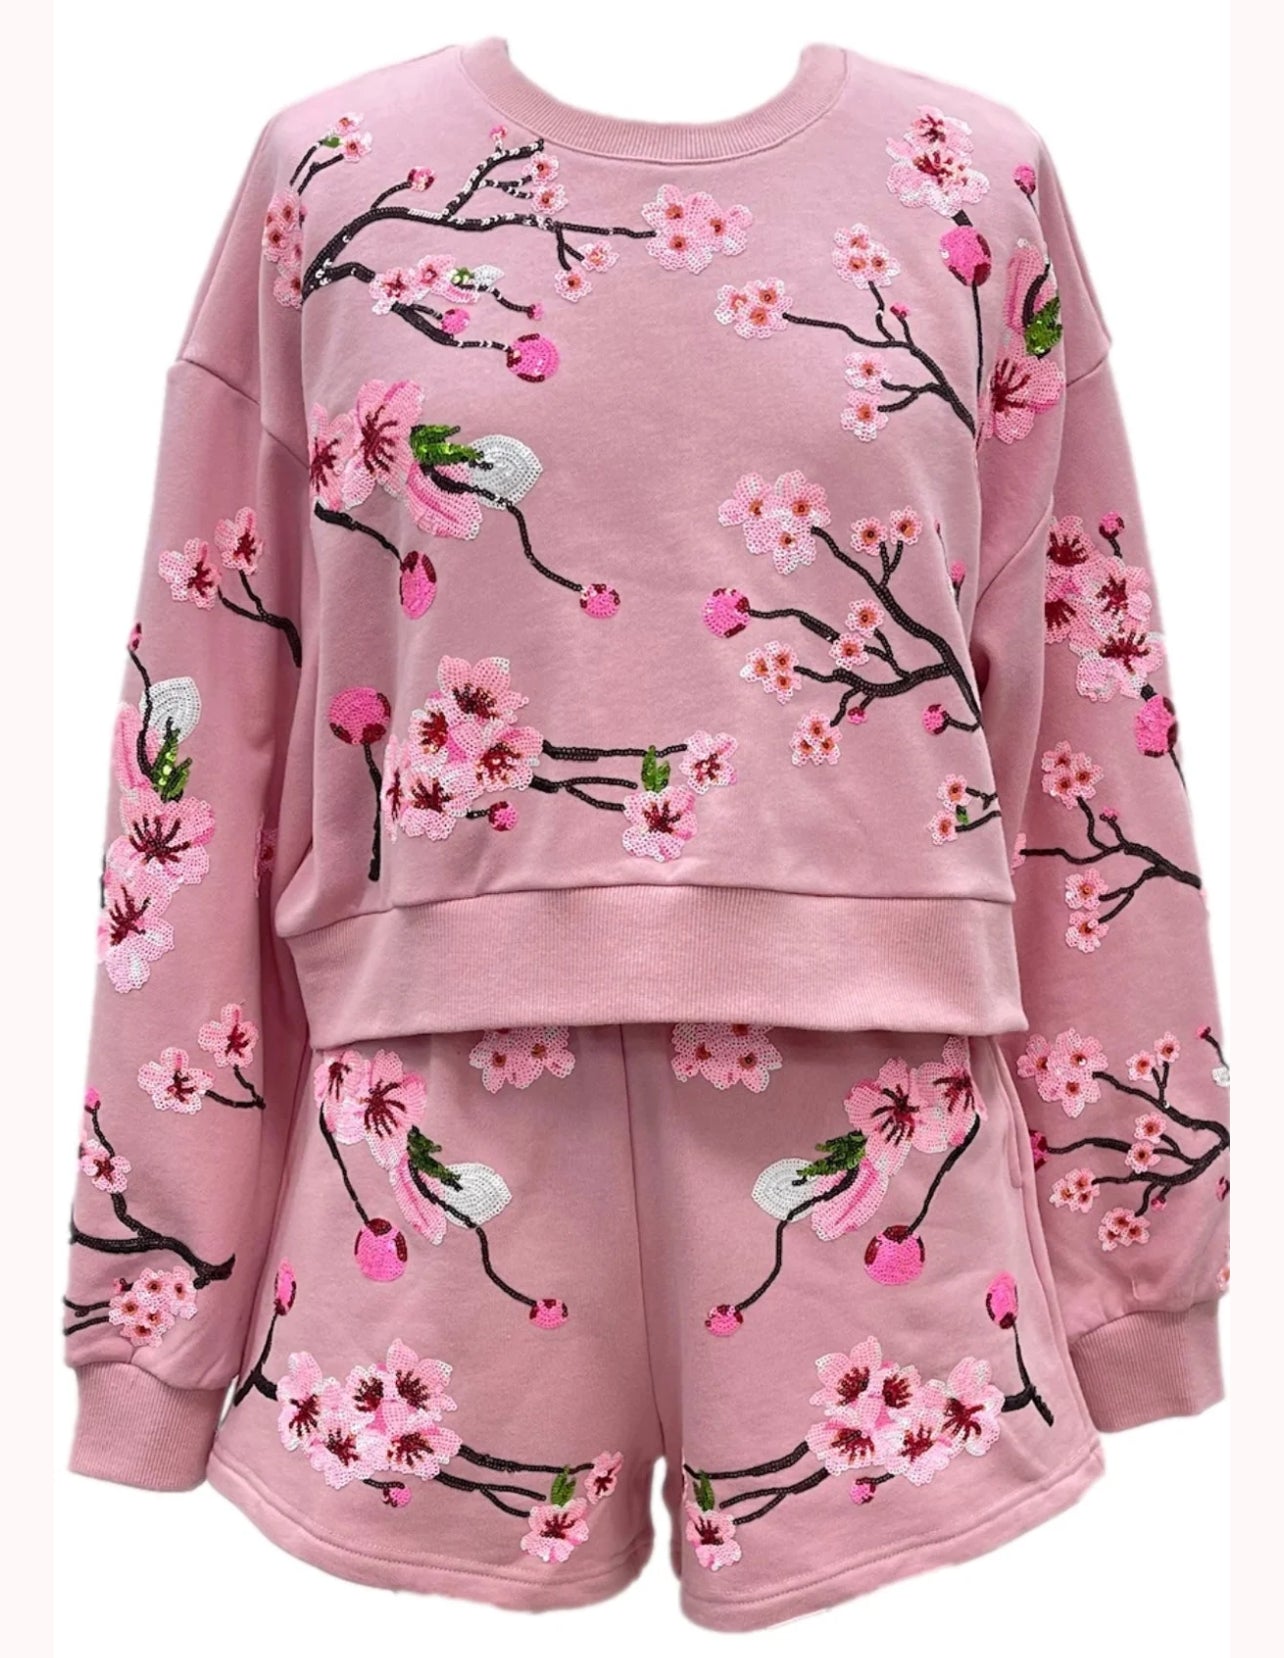 QOS Cherry Blossom Sweater